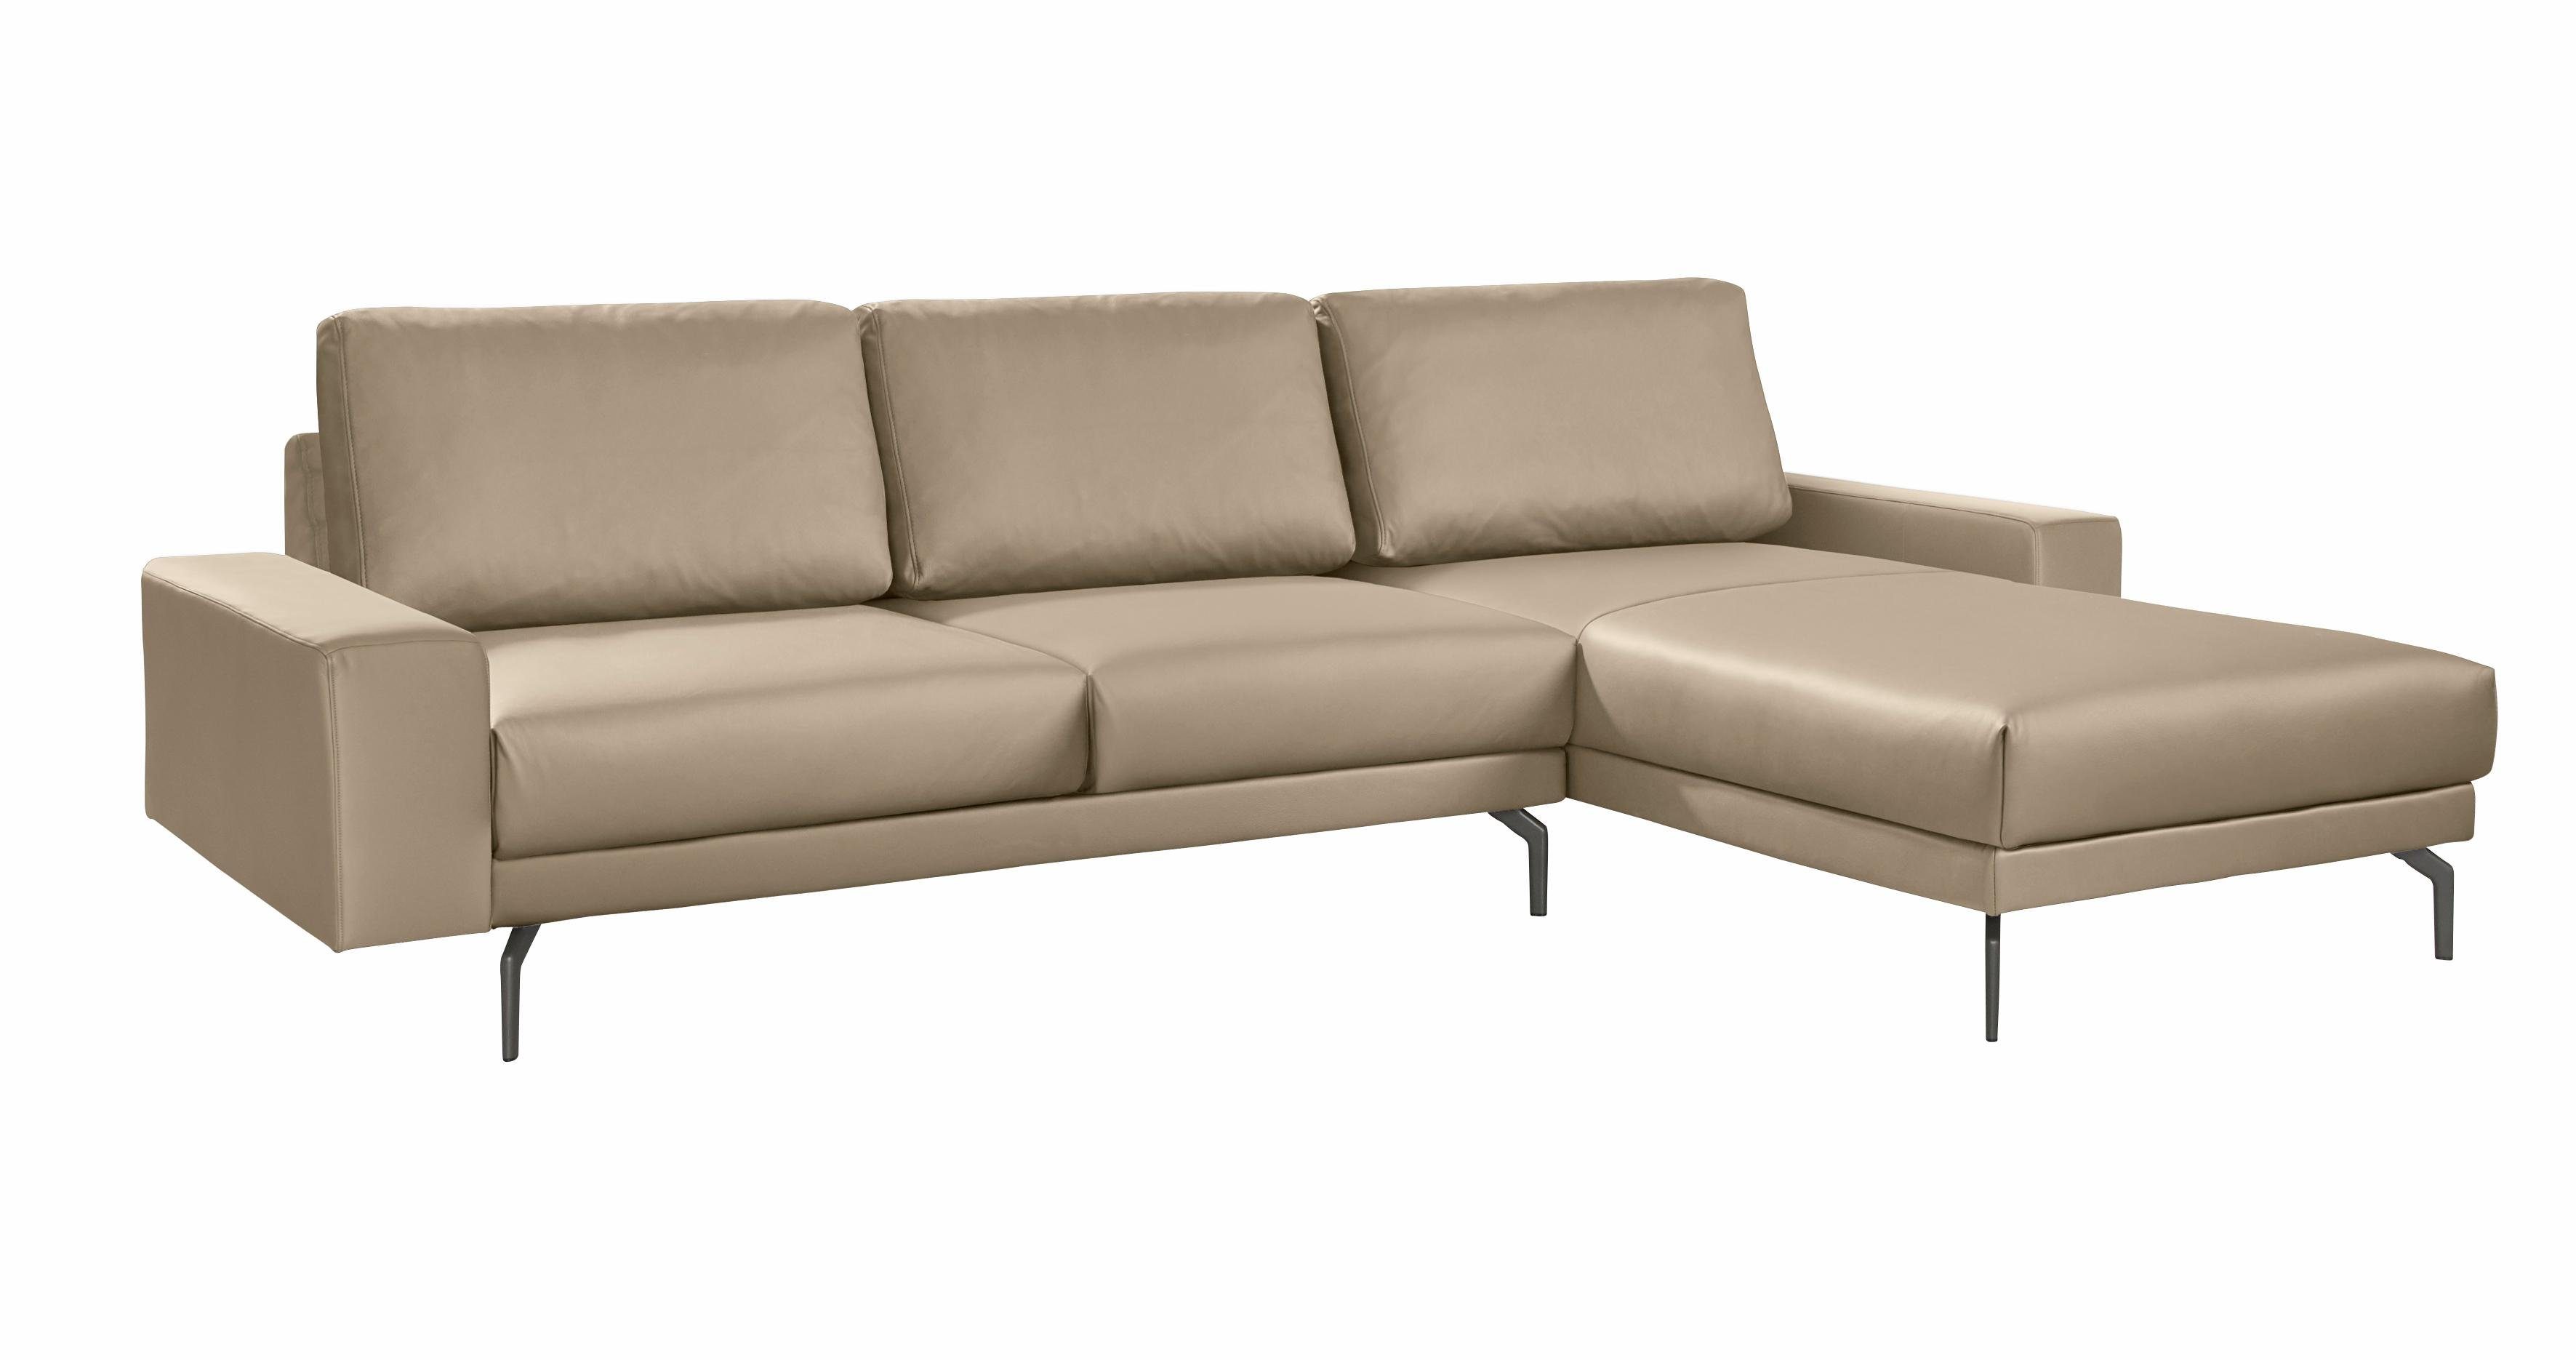 Armlehne Ecksofa umbragrau, Breite sofa Alugussfüße hülsta in hs.450, und breit niedrig, 274 cm